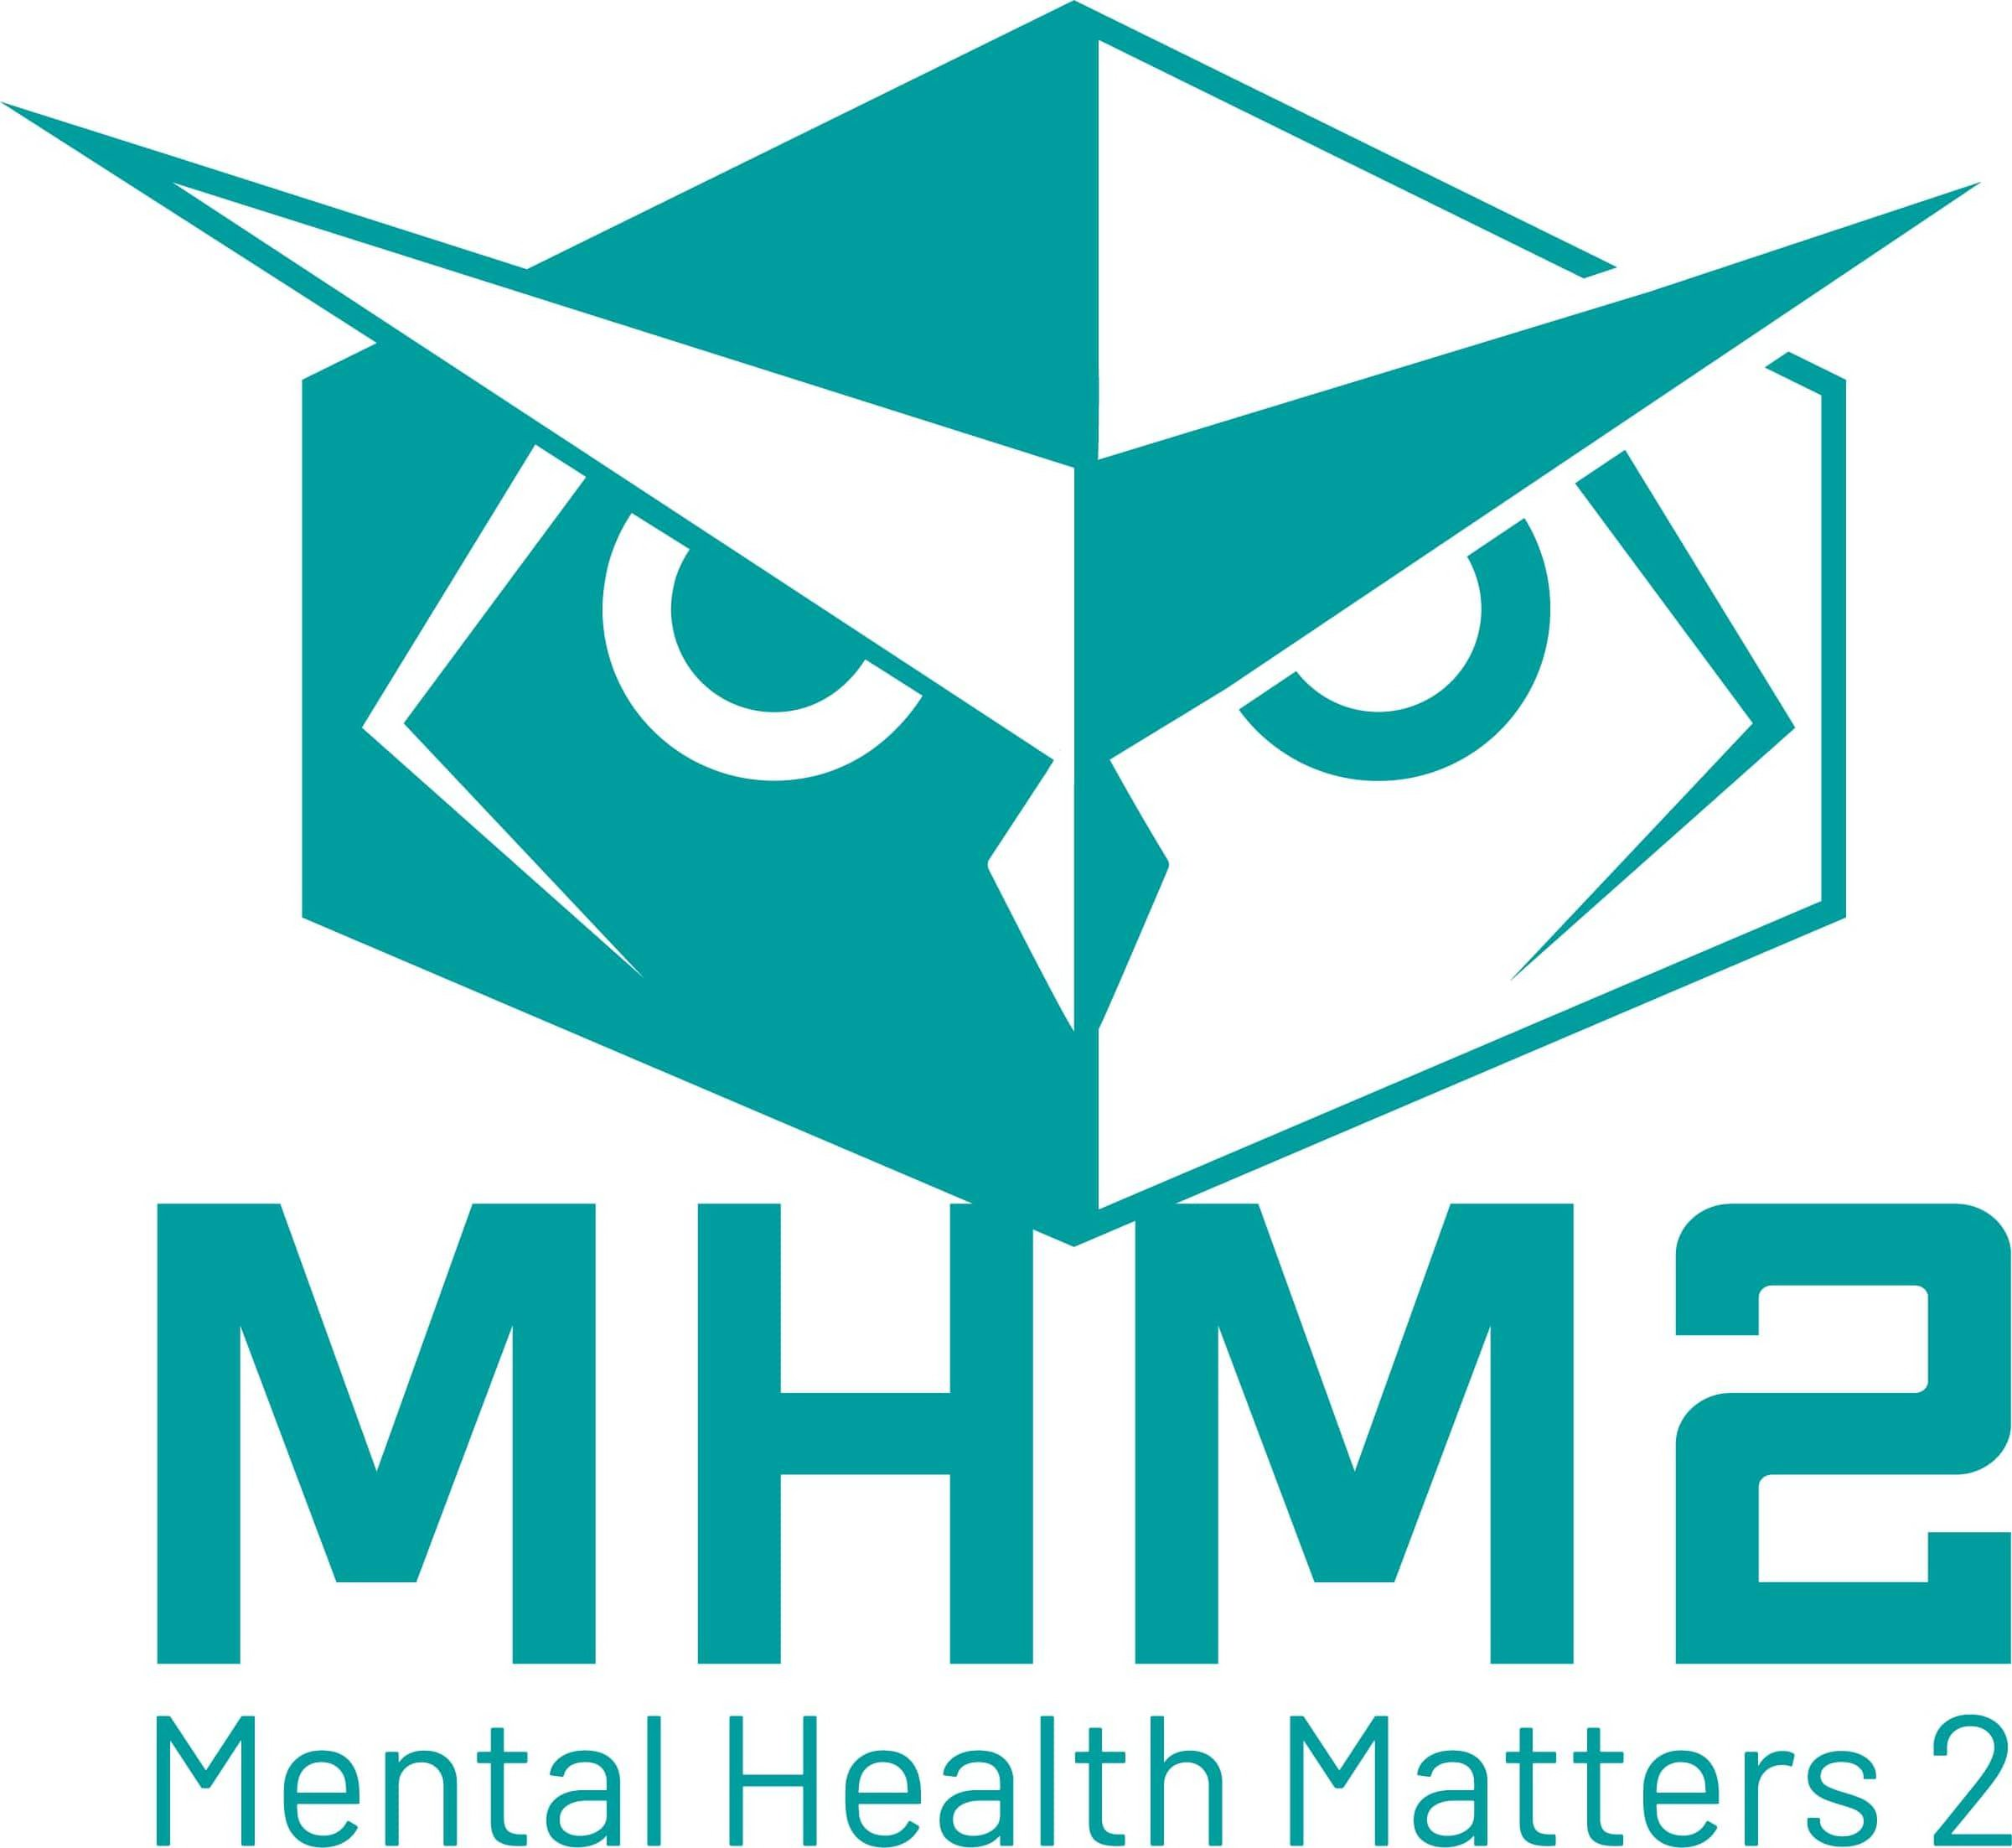  MHM2, MENTAL HEALTH MATTERS 2